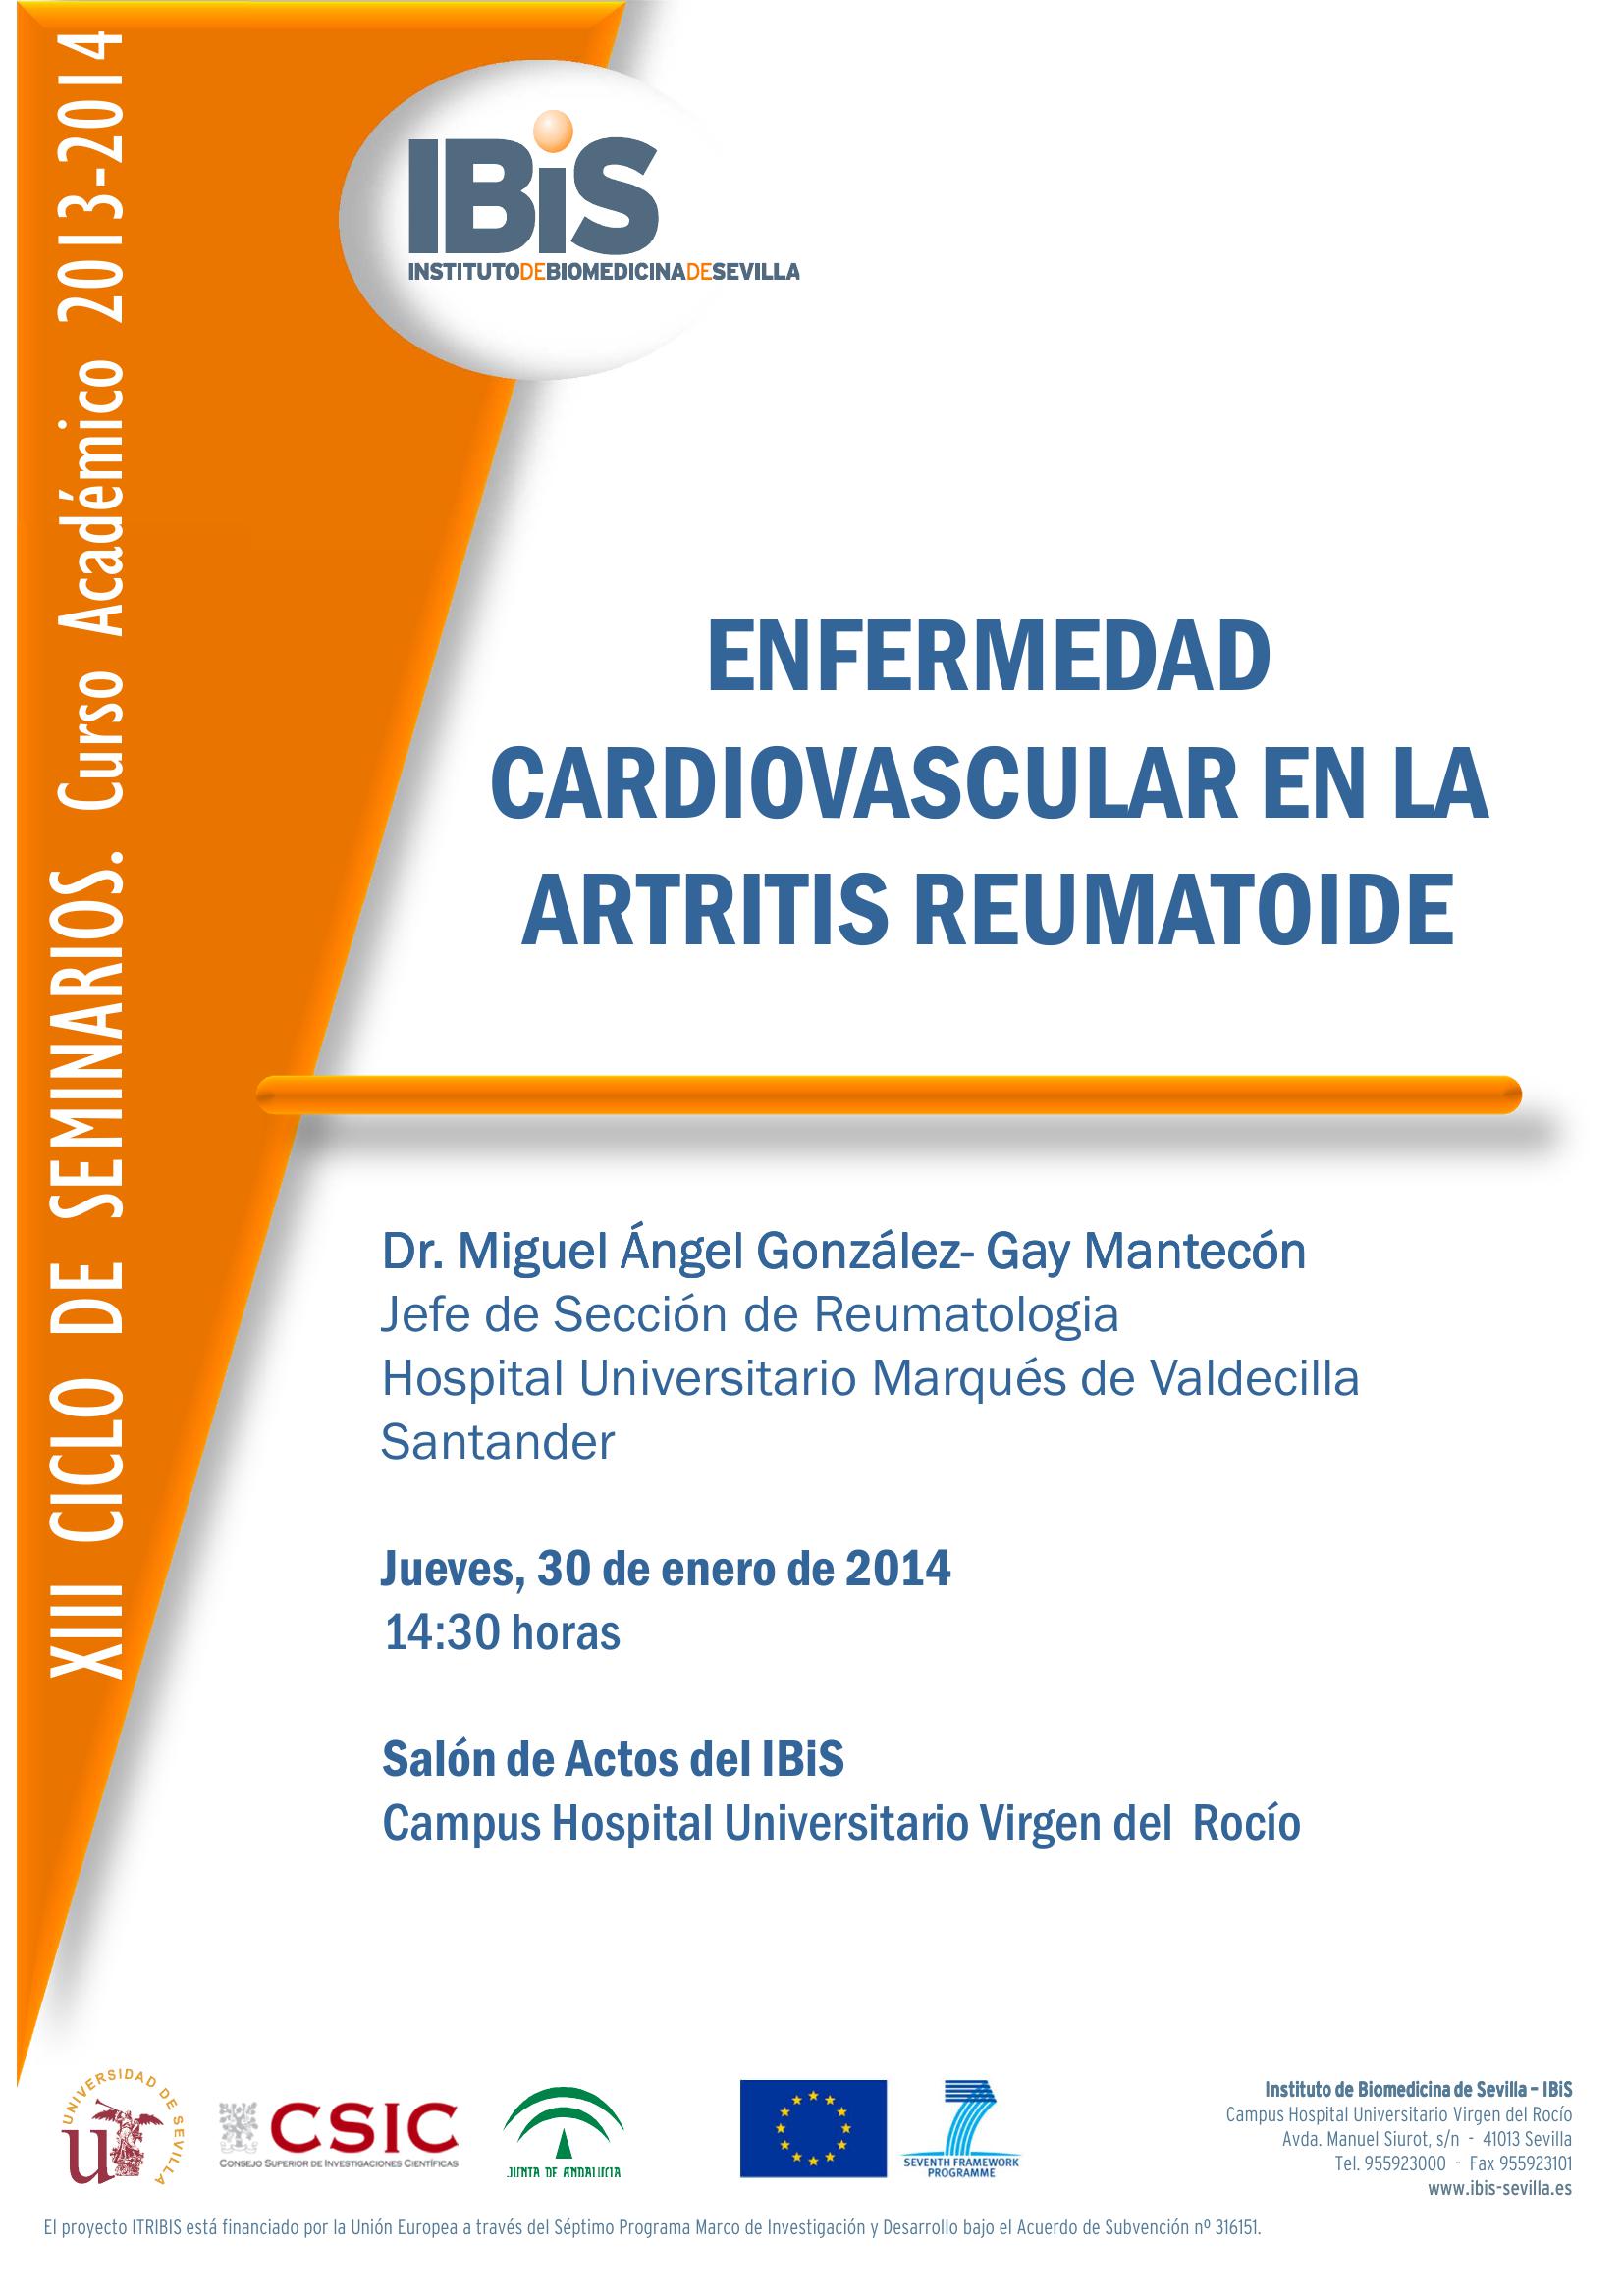 Poster: ENFERMEDAD CARDIOVASCULAR EN LA ARTRITIS REUMATOIDE